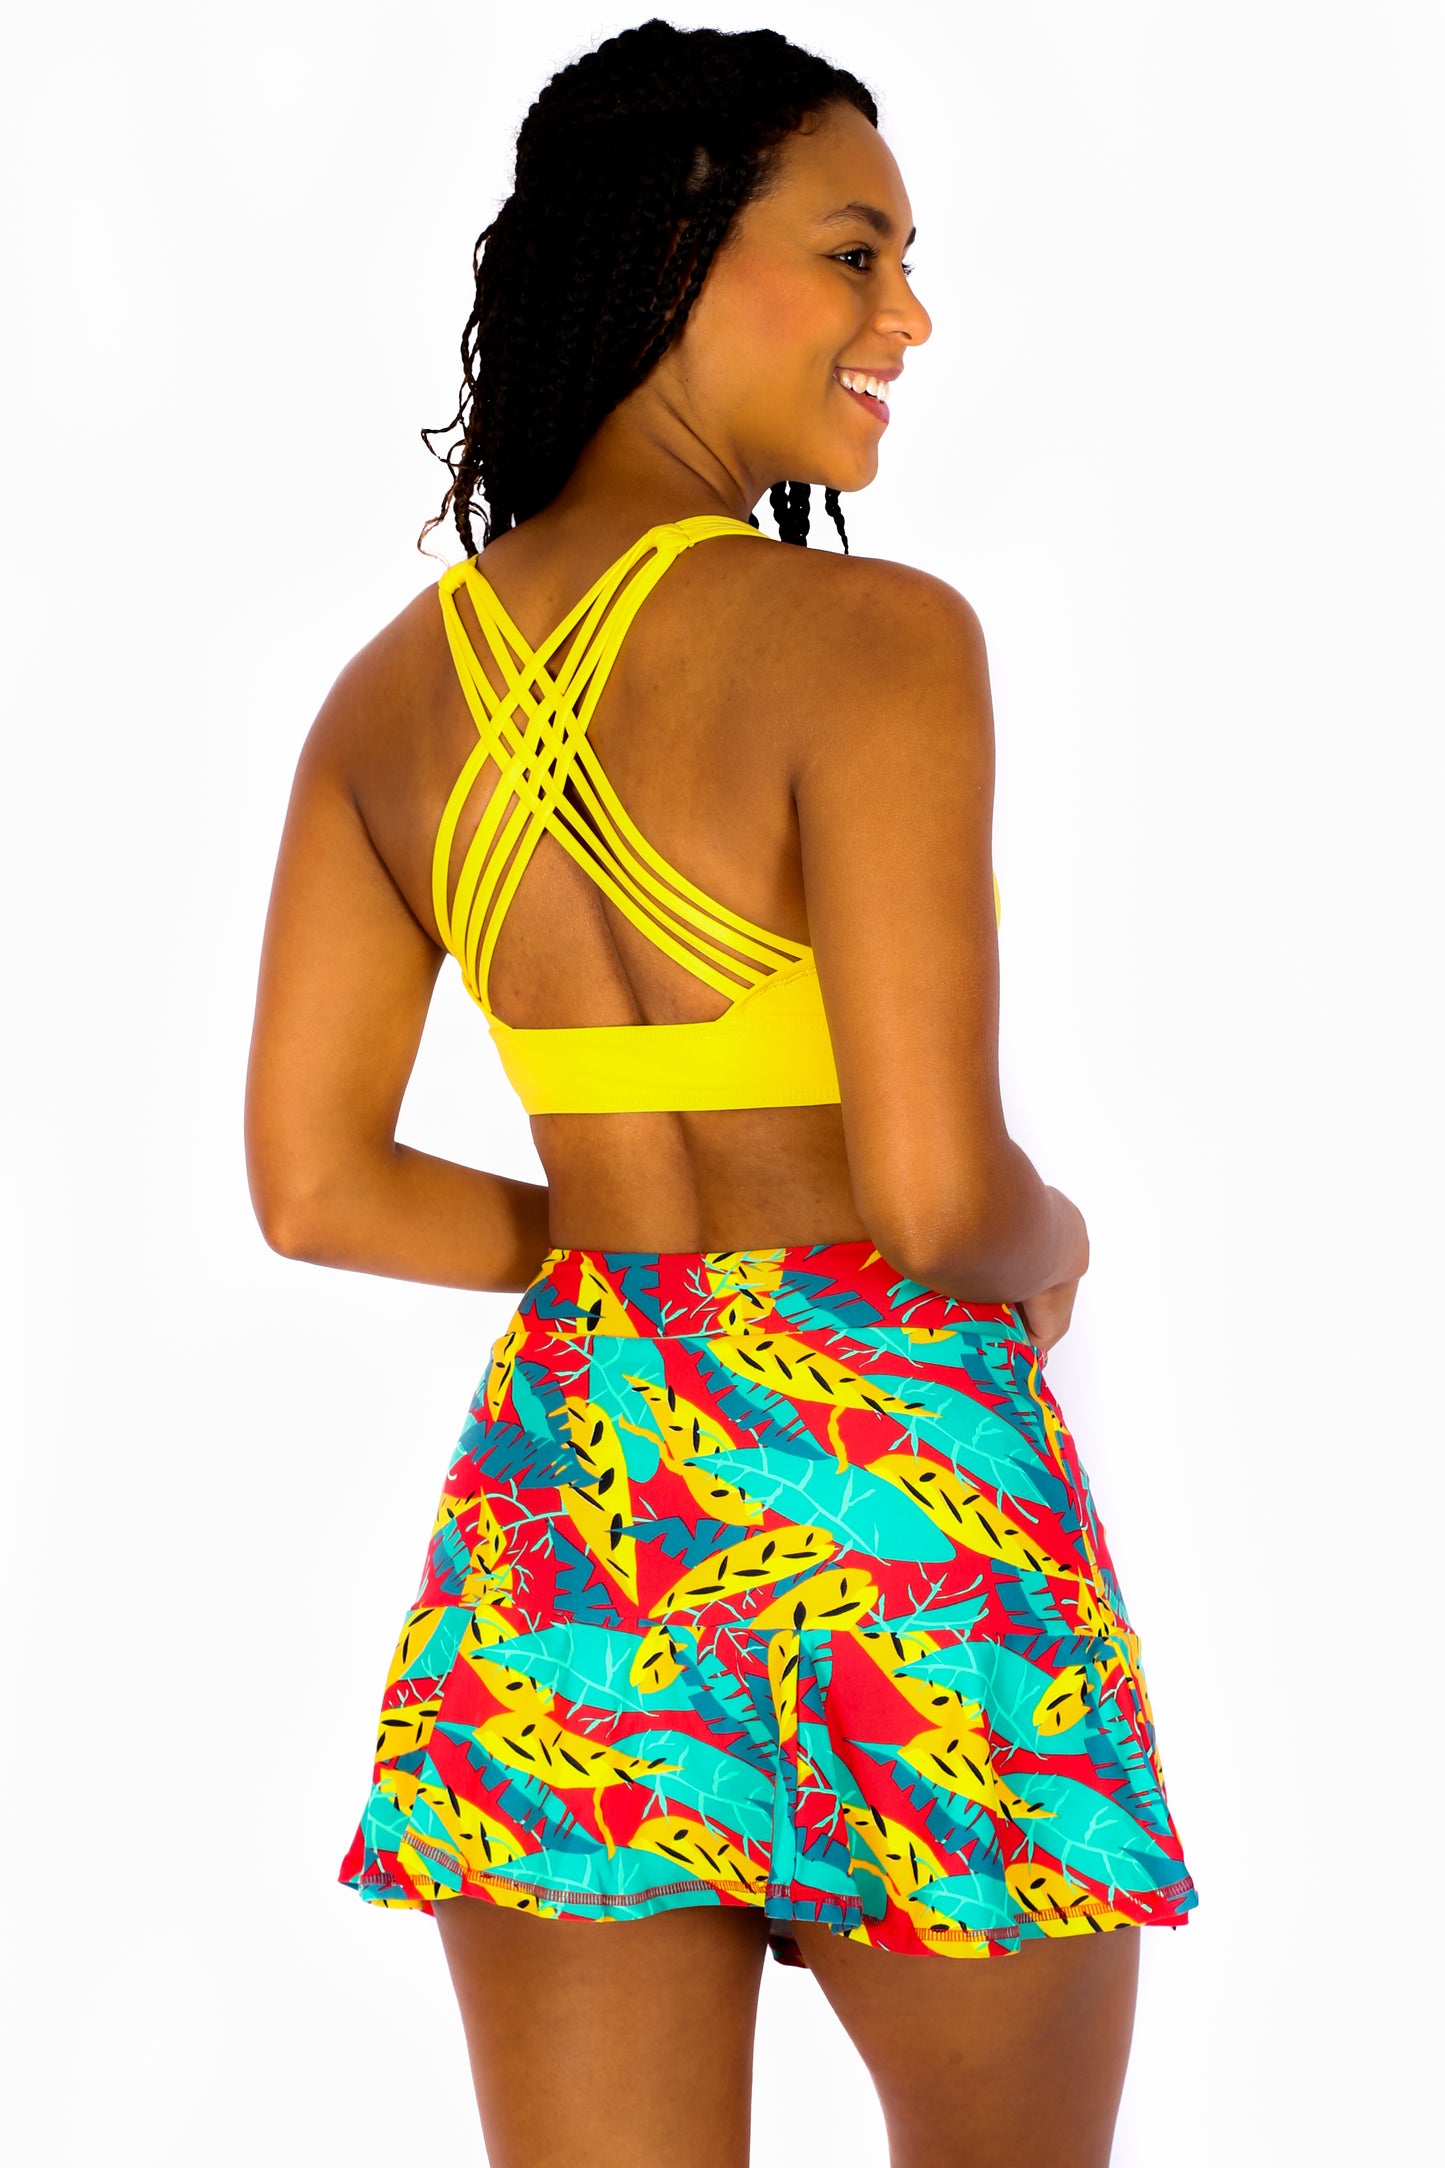 Carmen Miranda Set Shorts Skirt and Sports bra same print spots bra with elastics - Pocket